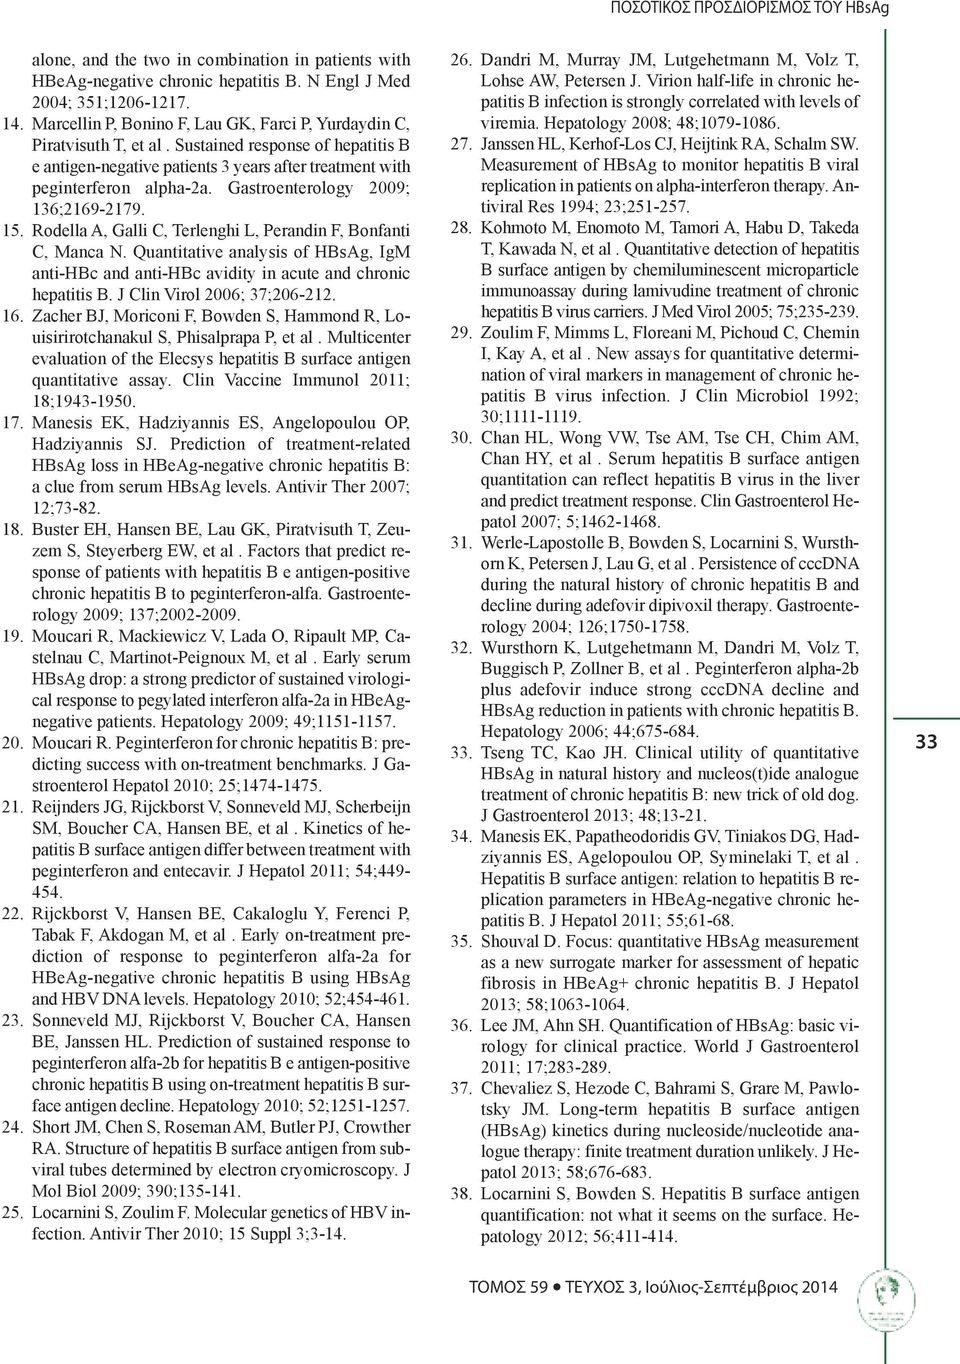 Gastroenterology 2009; 136;2169-2179. 15. Rodella A, Galli C, Terlenghi L, Perandin F, Bonfanti C, Manca N.